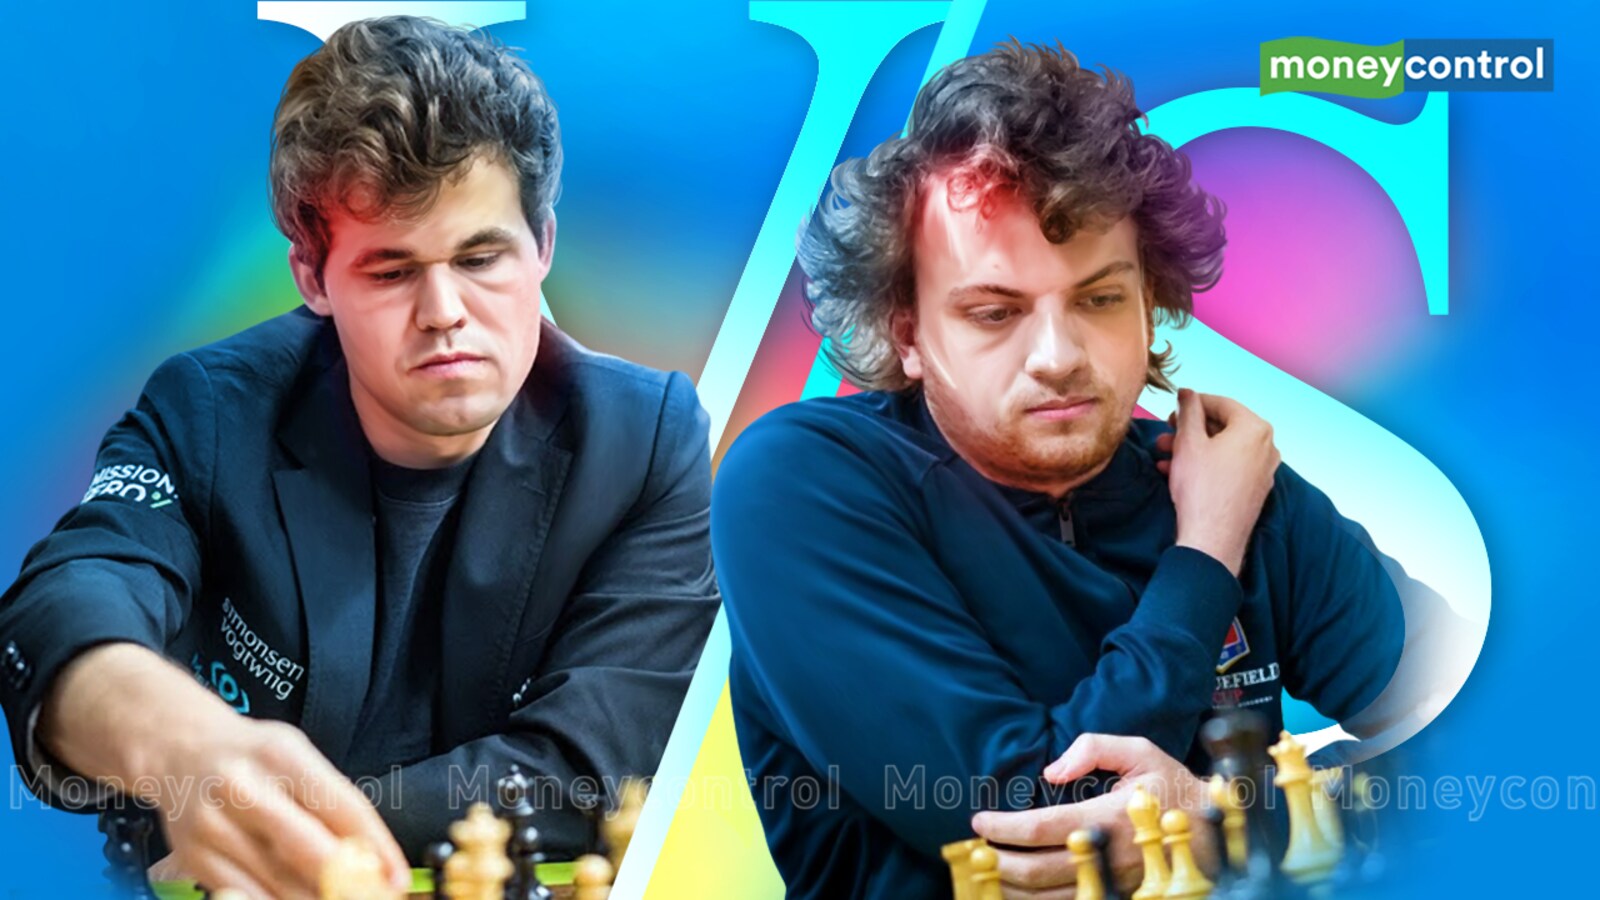 FIDE criticises Carlsen for his conduct in the Niemann Saga